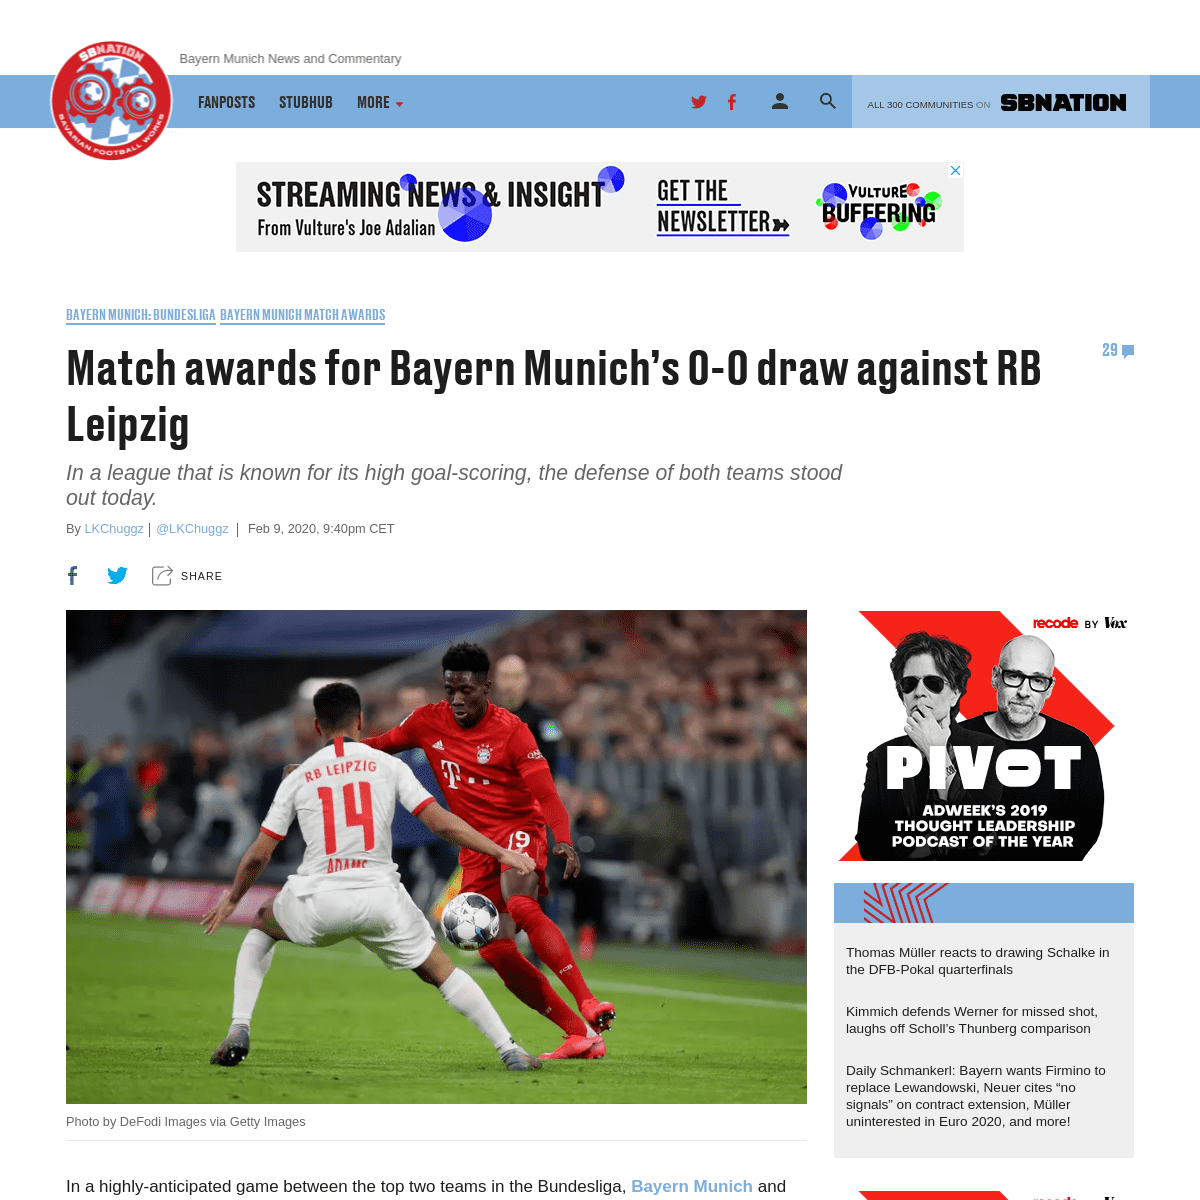 A complete backup of www.bavarianfootballworks.com/2020/2/9/21130425/bayern-munich-match-awards-player-rankings-bundesliga-alpho